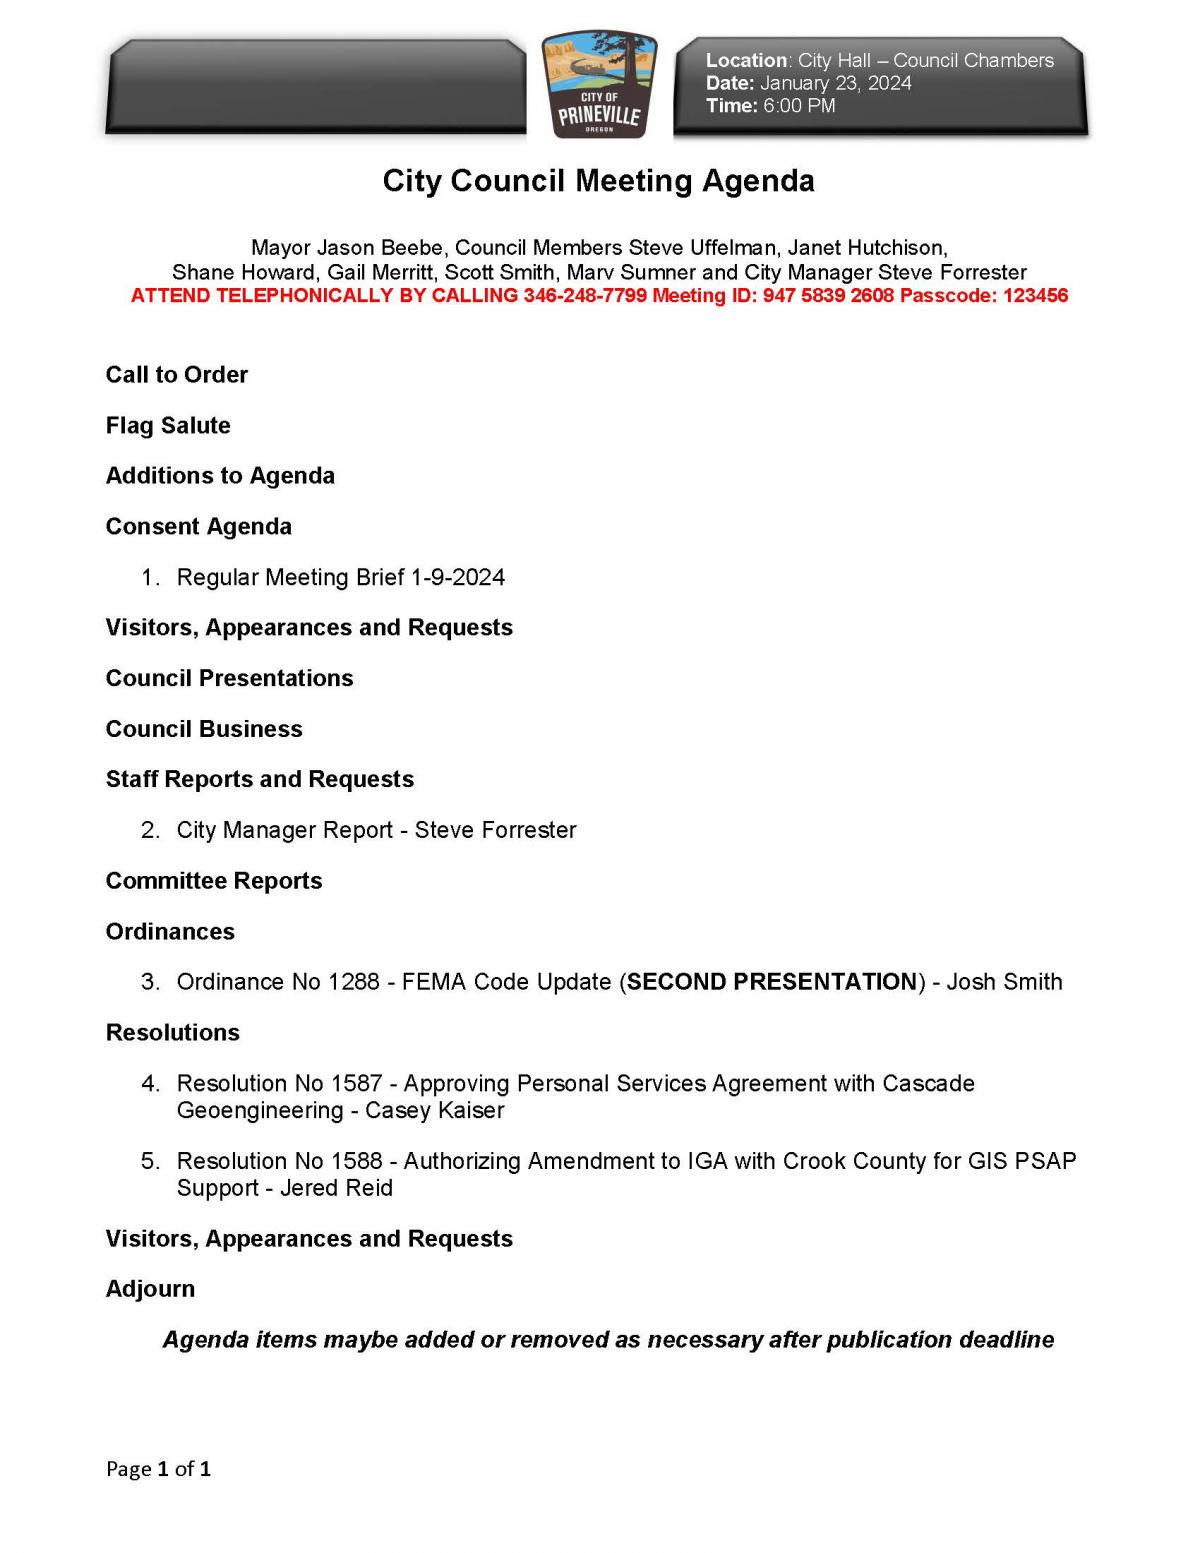 Council Agenda 1-23-2024